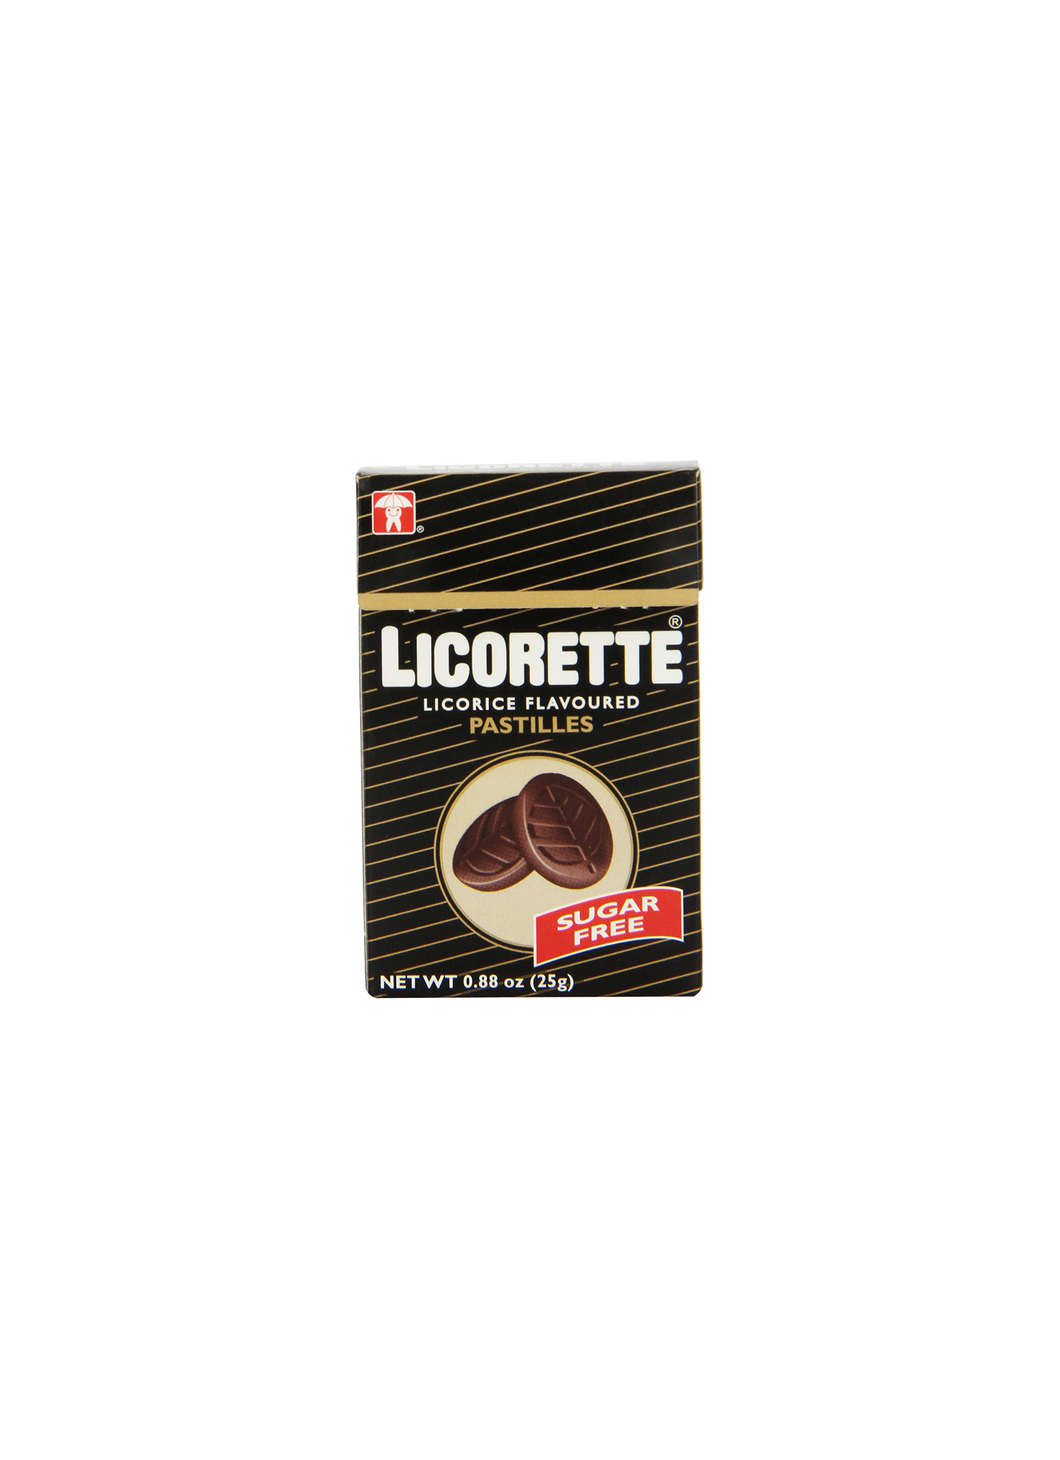 Licorette Licorice Flavoured Pastilles 25g